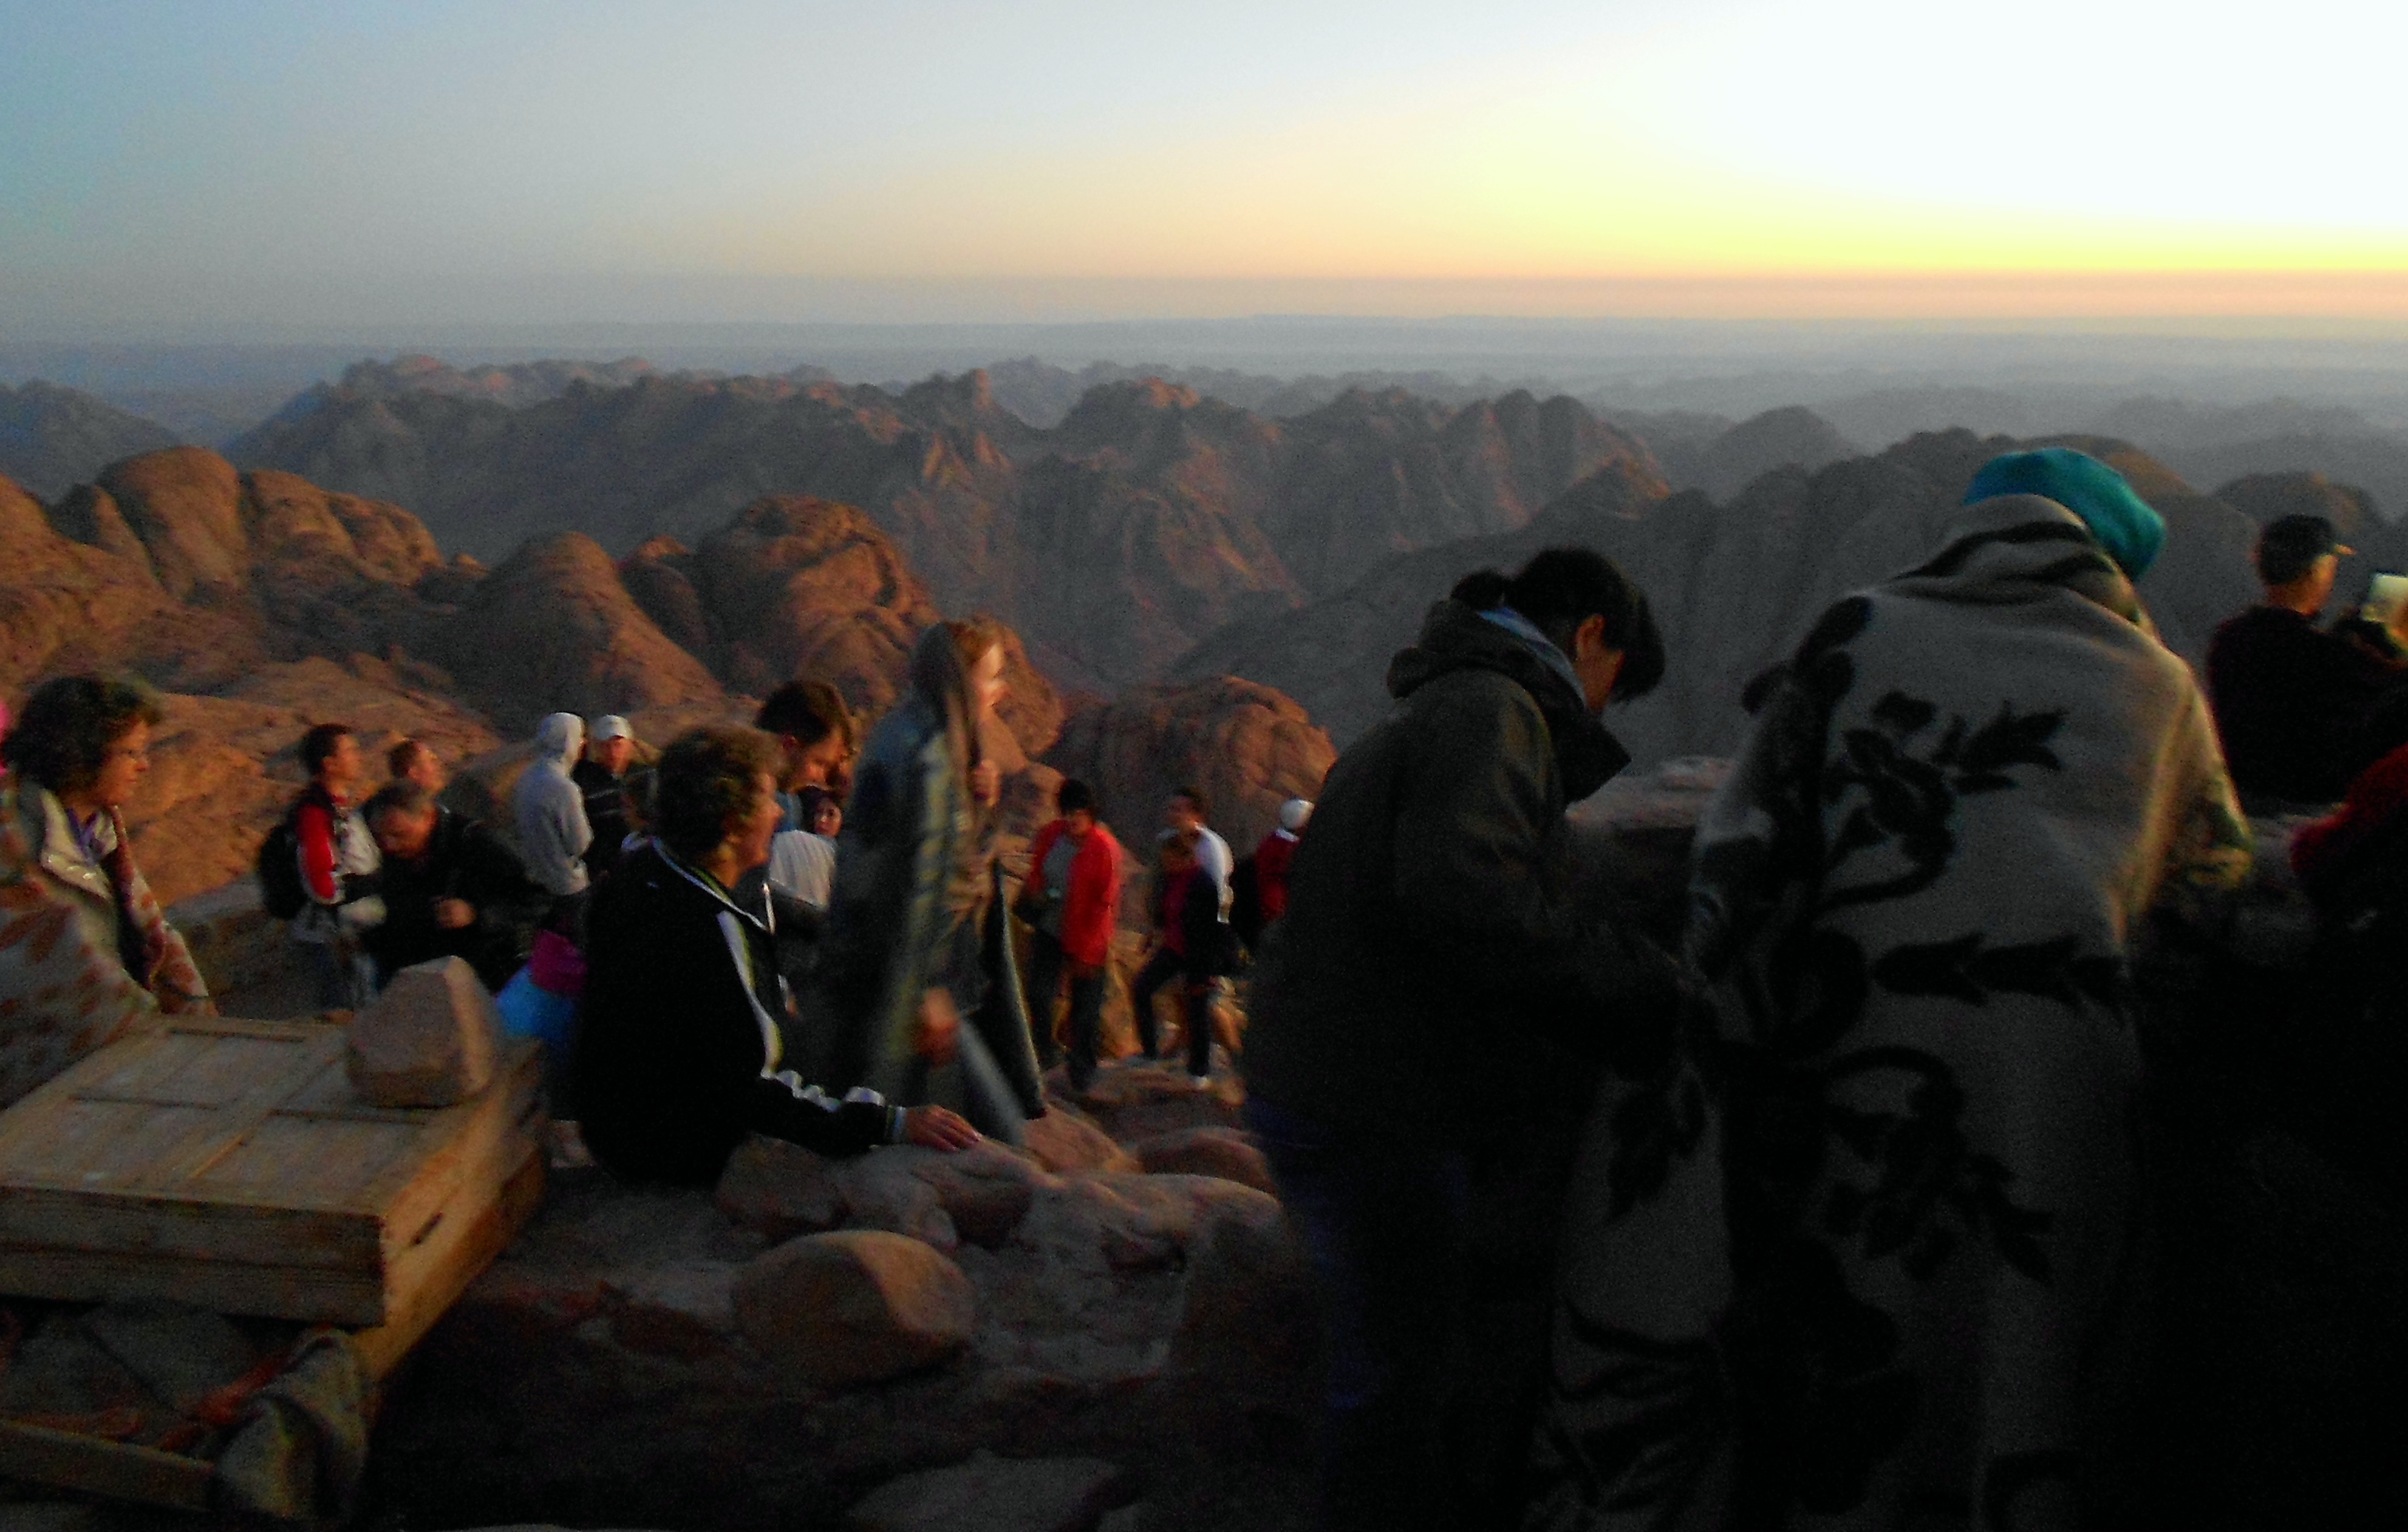 Mt-Sinai-crowds-at-summit.jpg